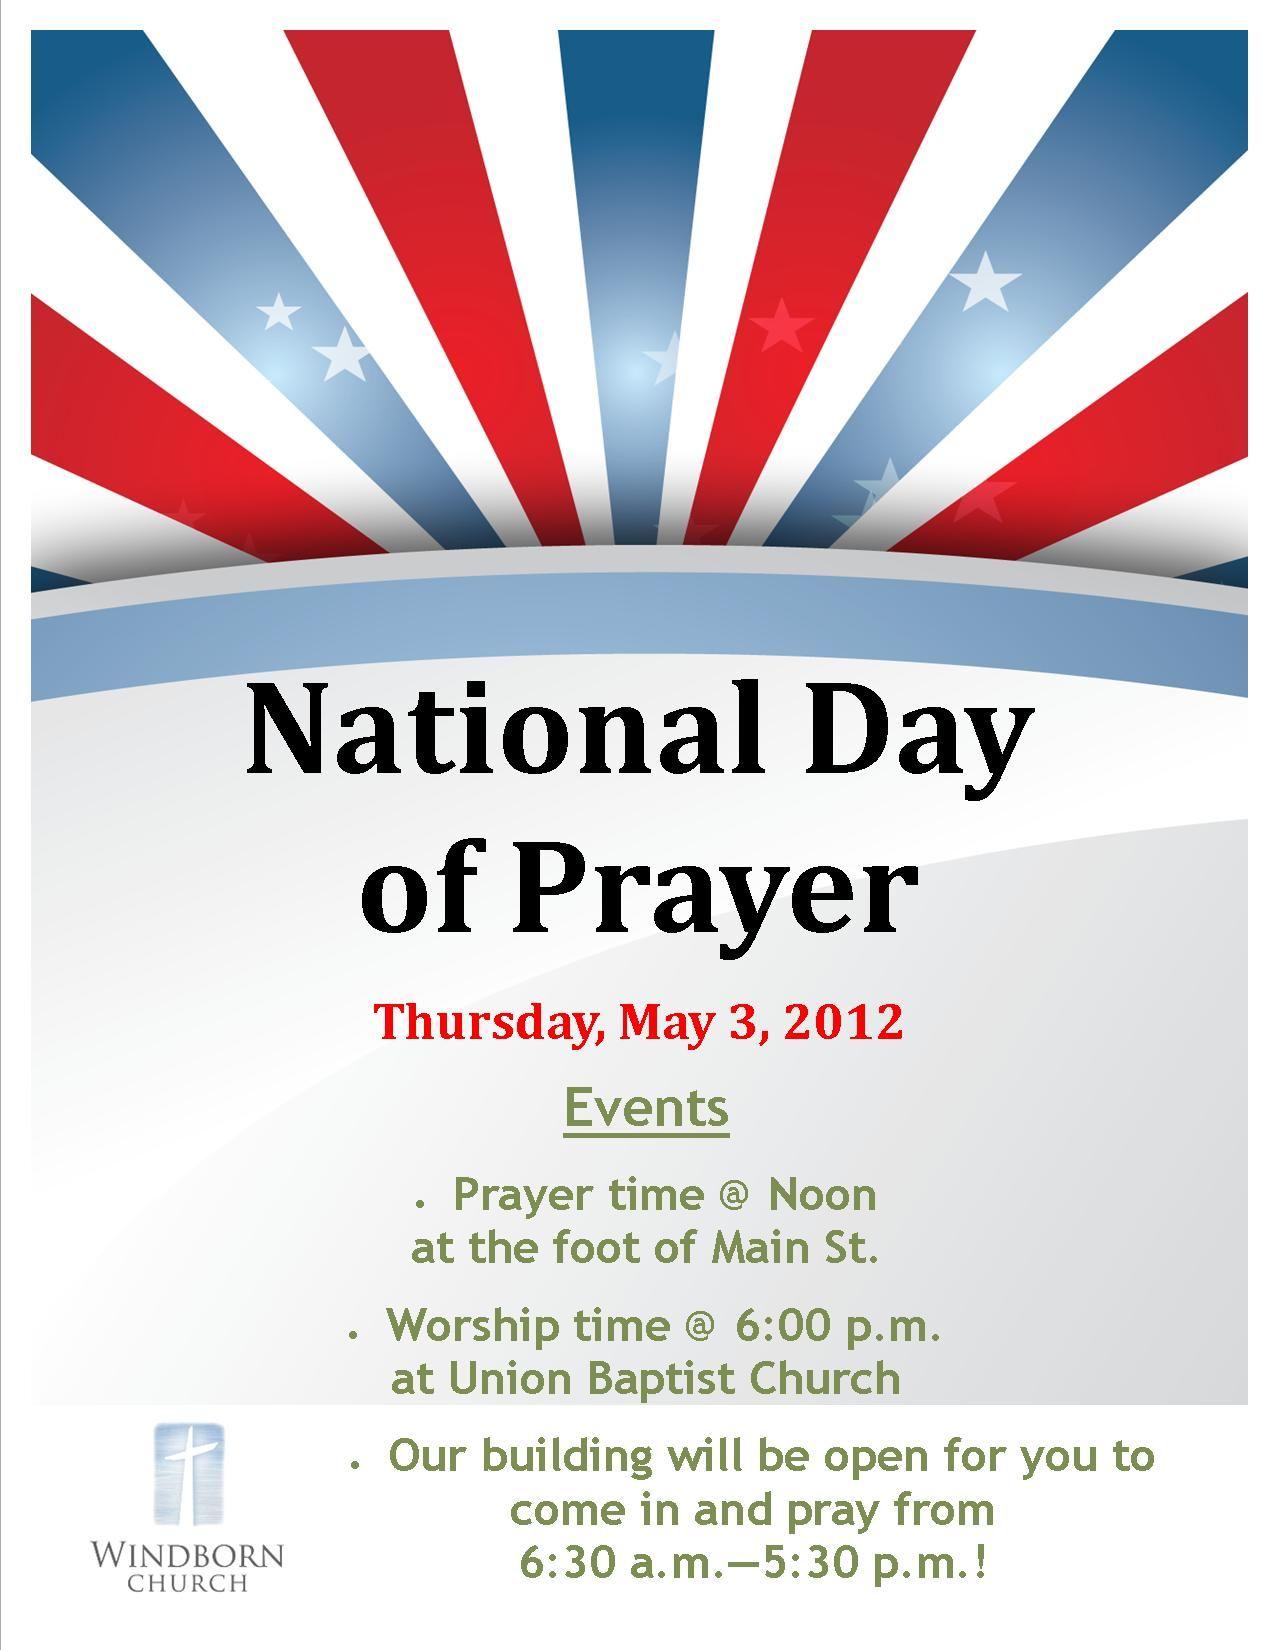 2015 National Day of Prayer Logo - National Day of Prayer